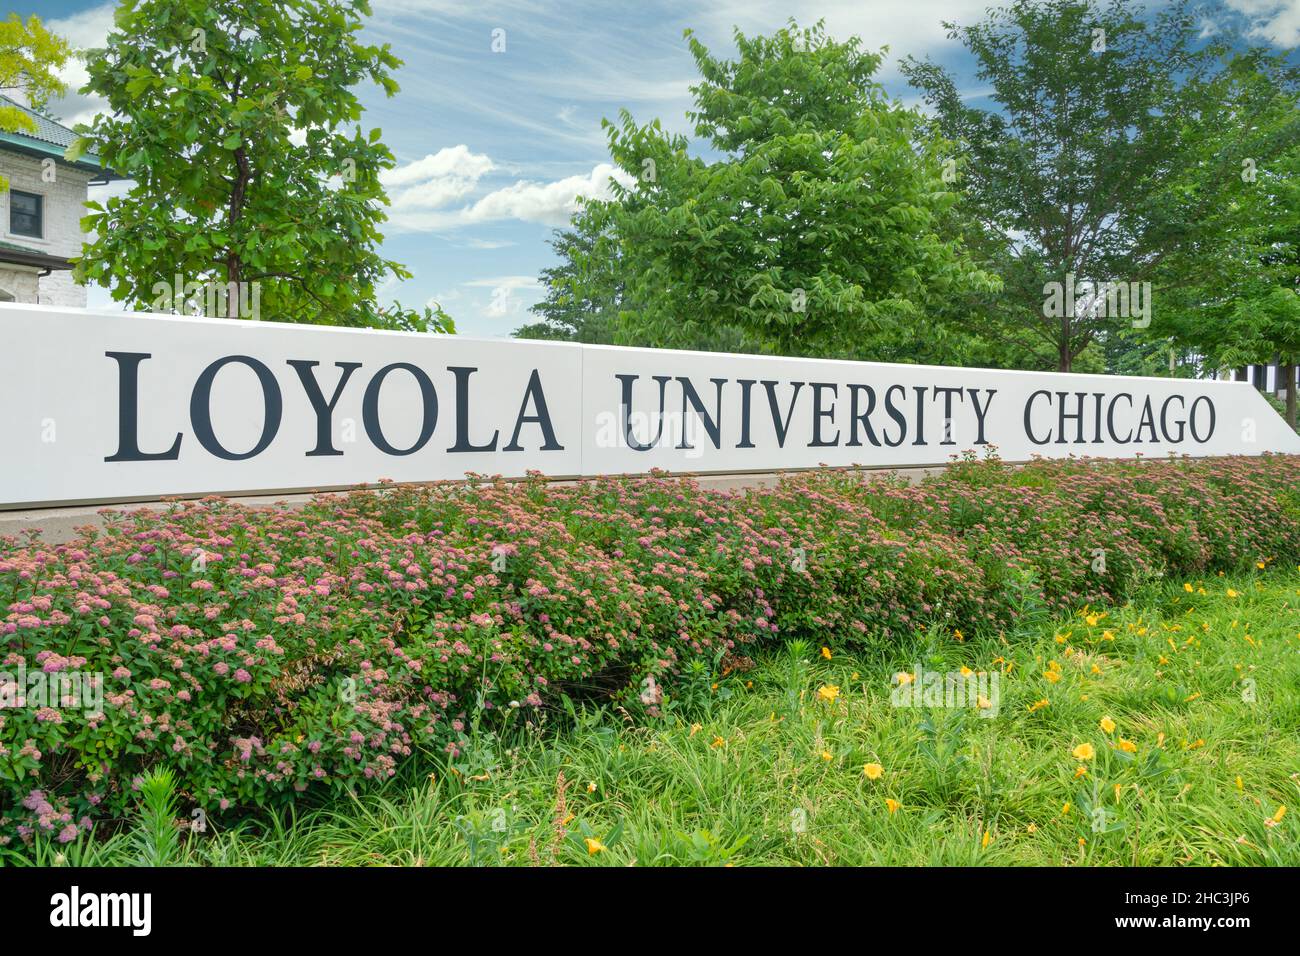 CHICAGO, IL, USA - JUNE 21, 2021: Entrance sign to Loyola University Chicago. Stock Photo